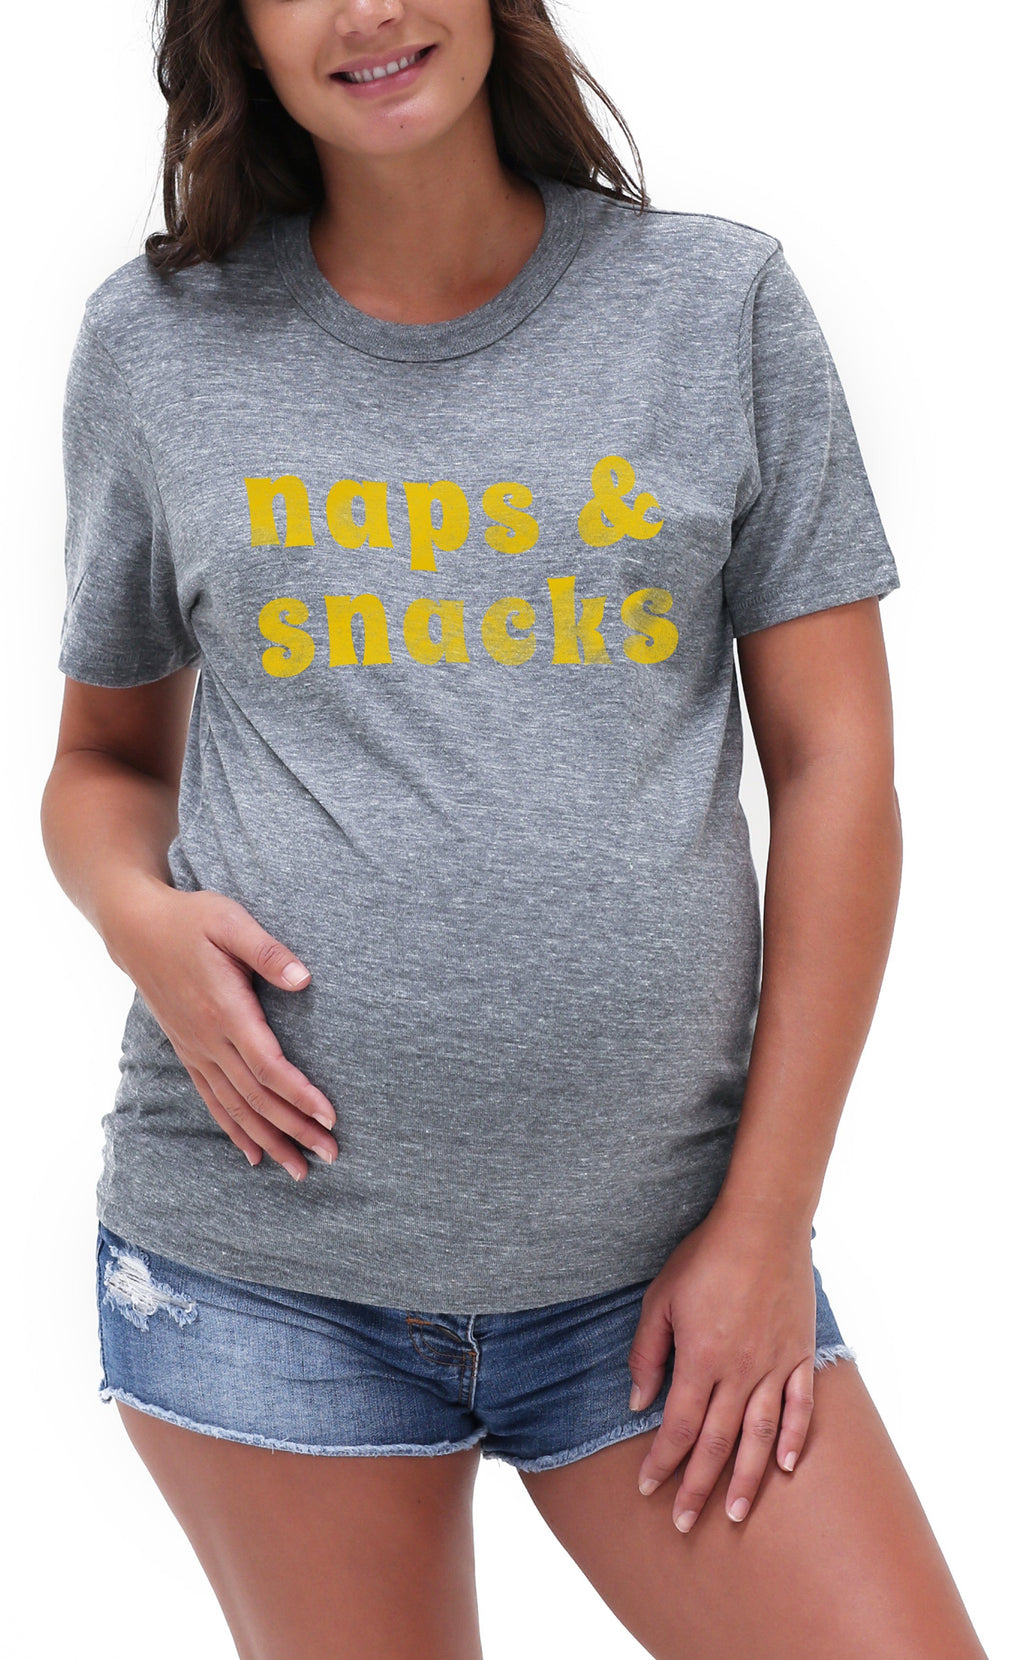 Naps and Snacks Triblend Graphic Tee Shirt Tee Shirt robertwilsonassociates Nursing Apparel S heather gray 